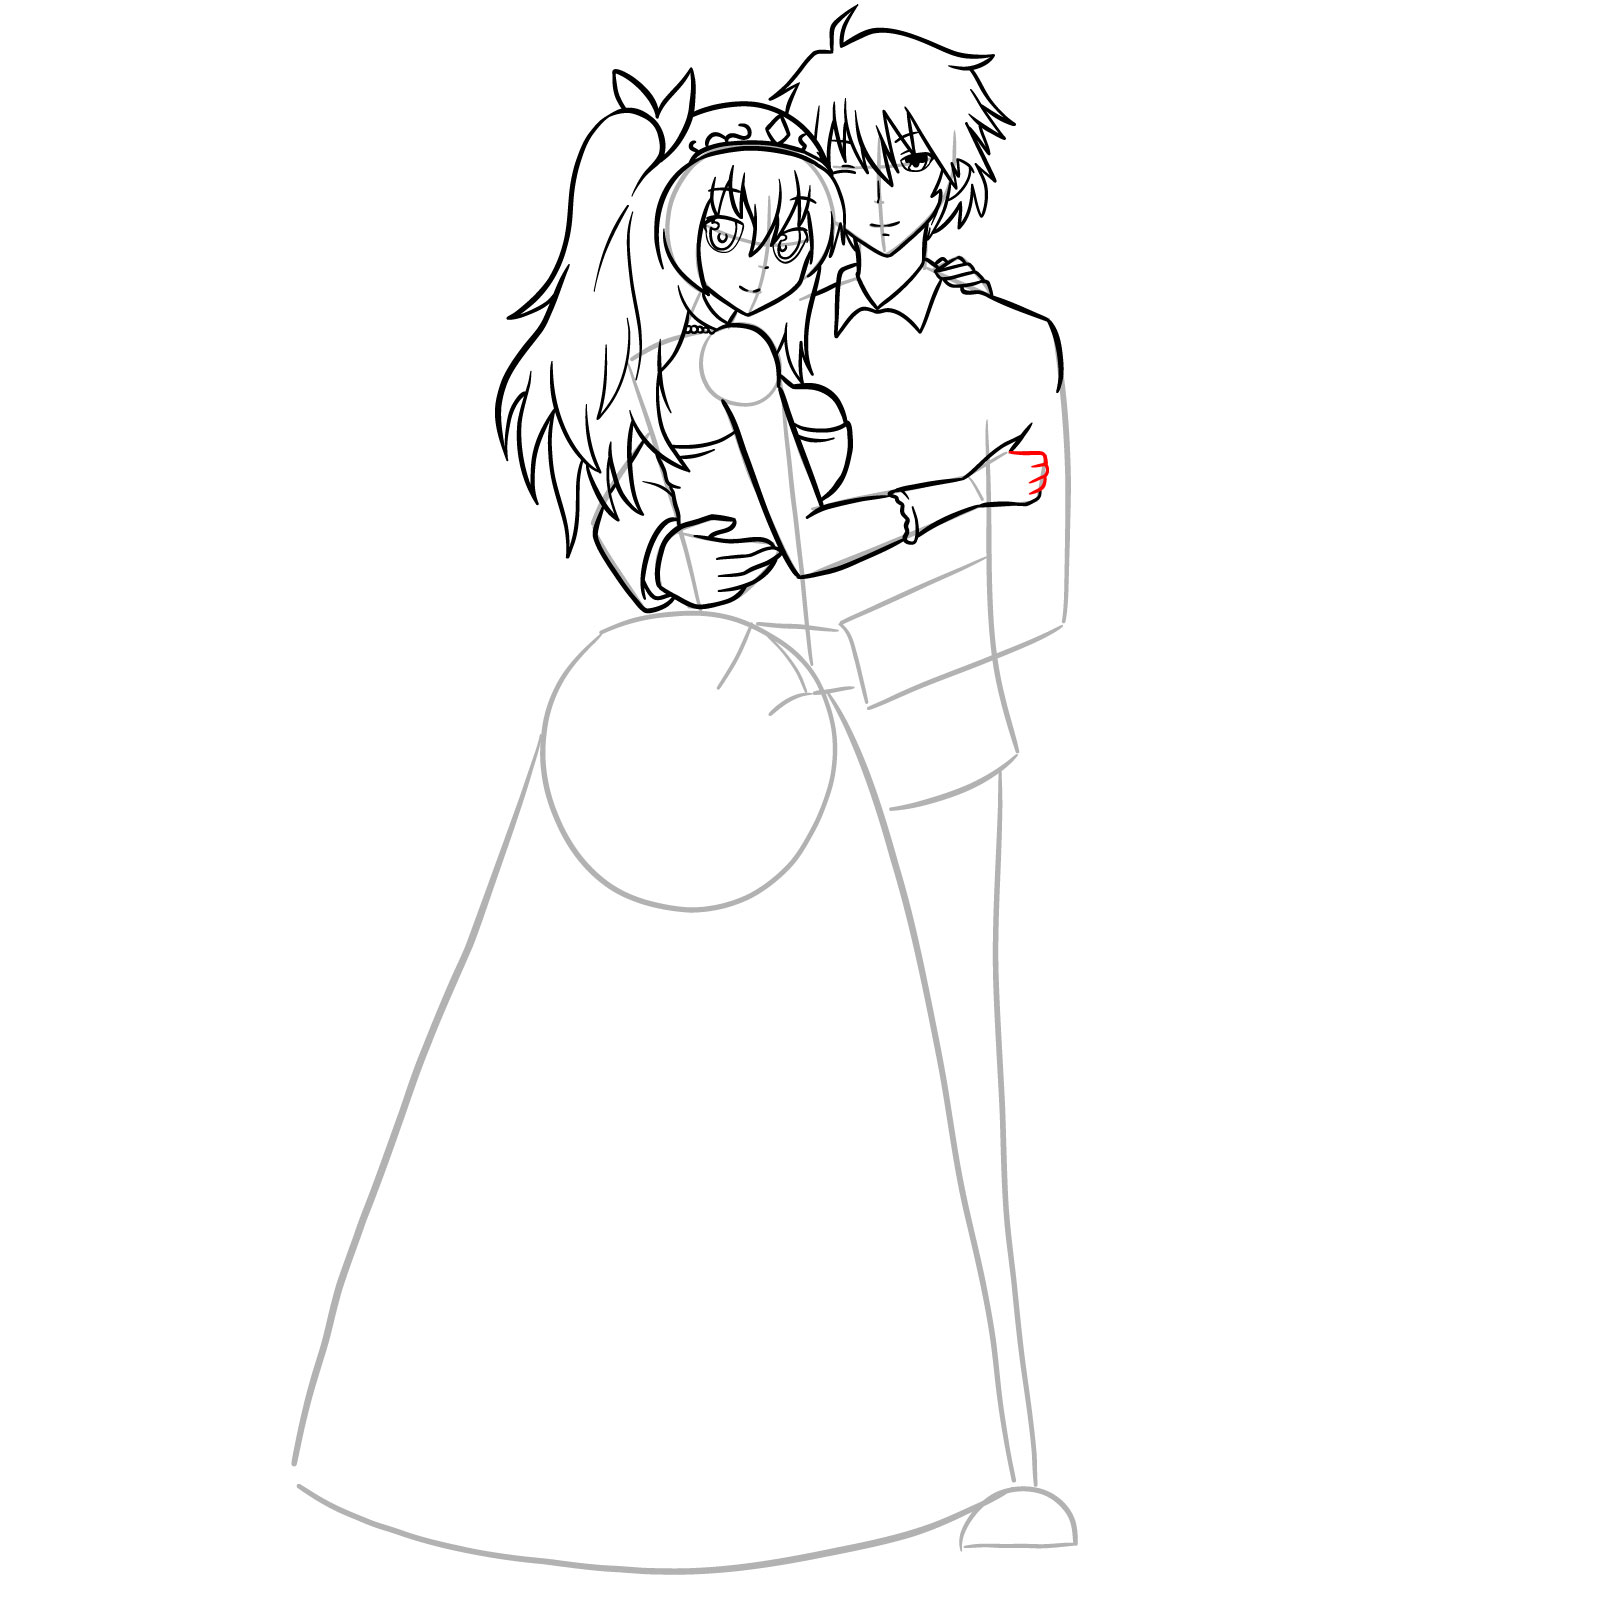 How to draw Ikki and Stella's wedding - step 39